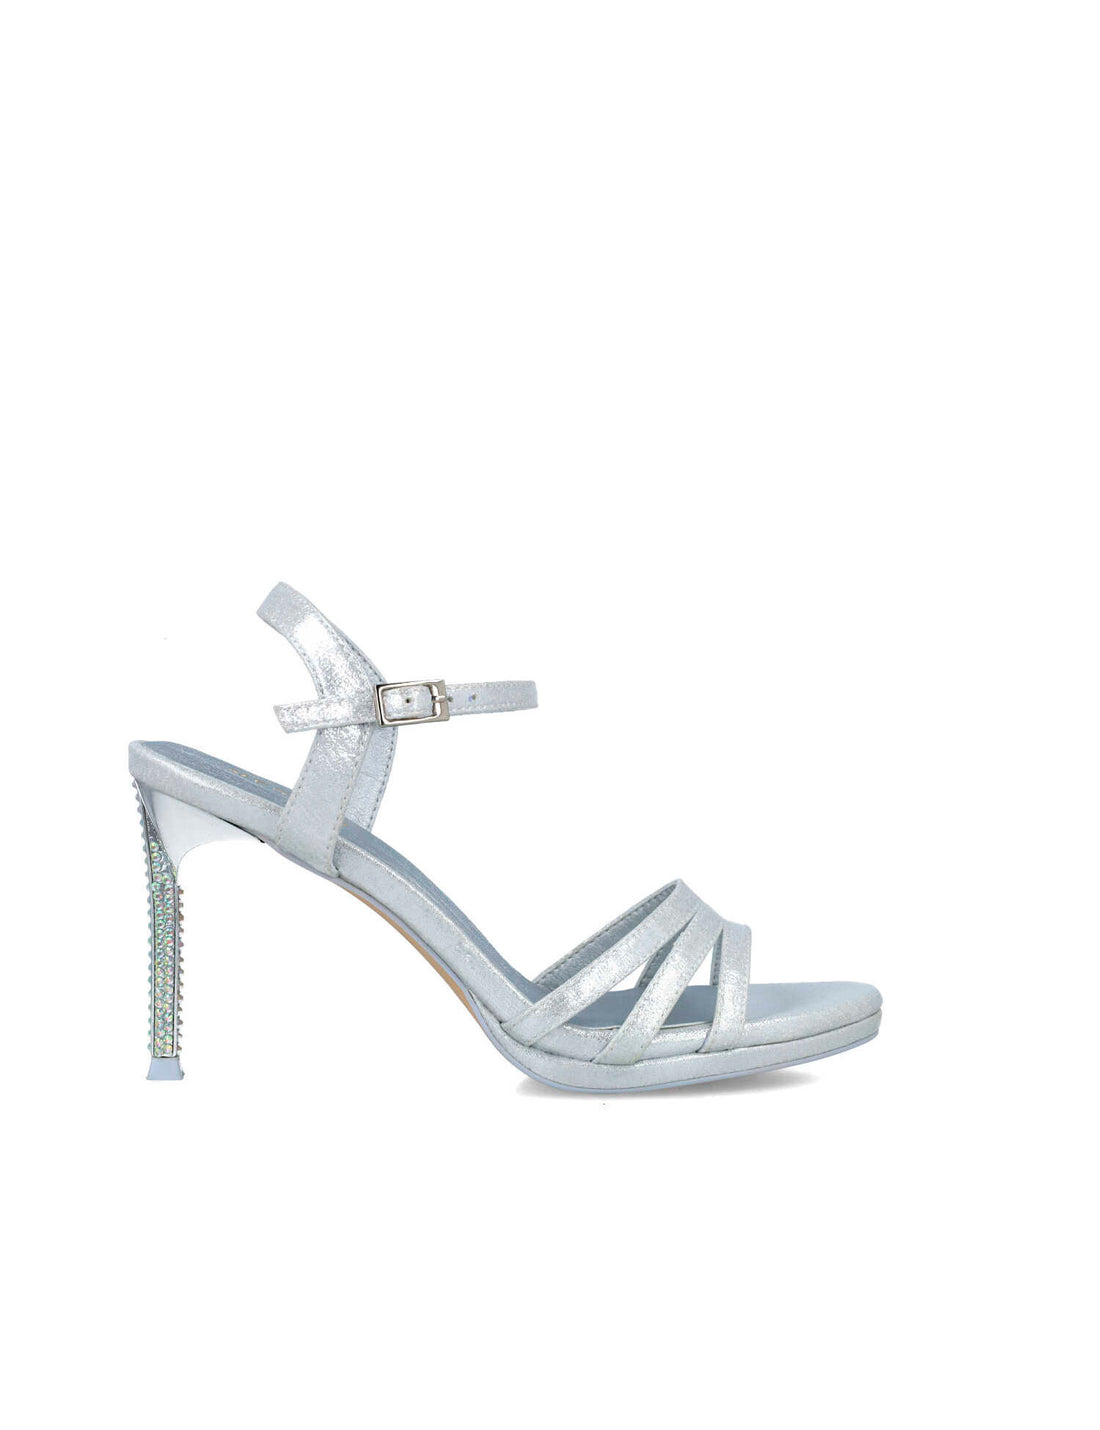 Silver Sandals With Embellished Heel_24713_09_01